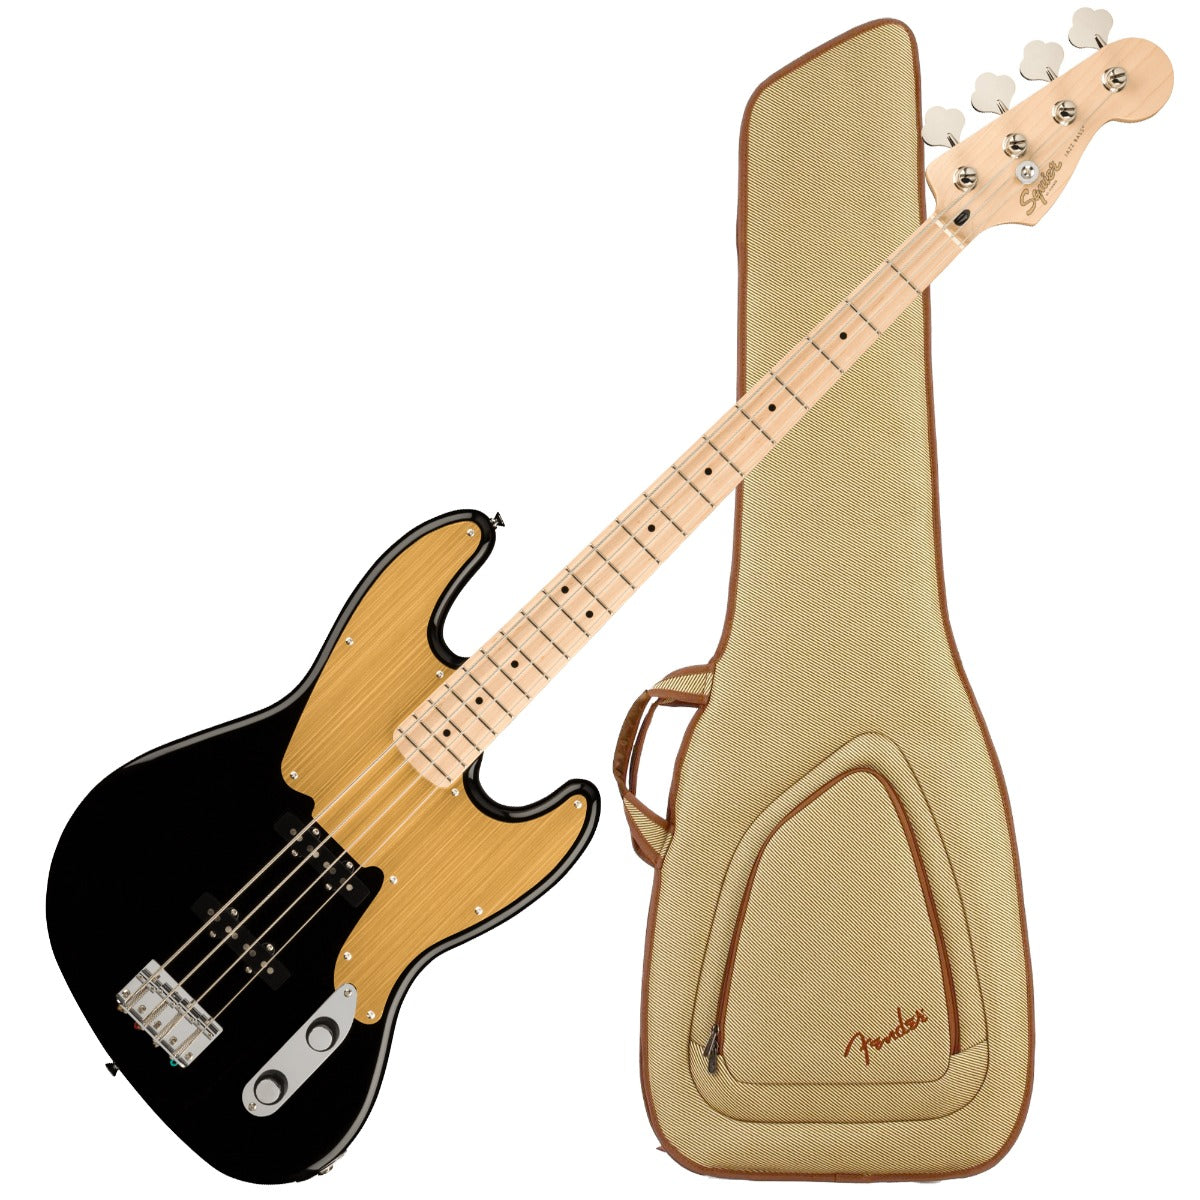 Squier Paranormal Jazz Bass '54 - Maple, Black PERFORMER PAK